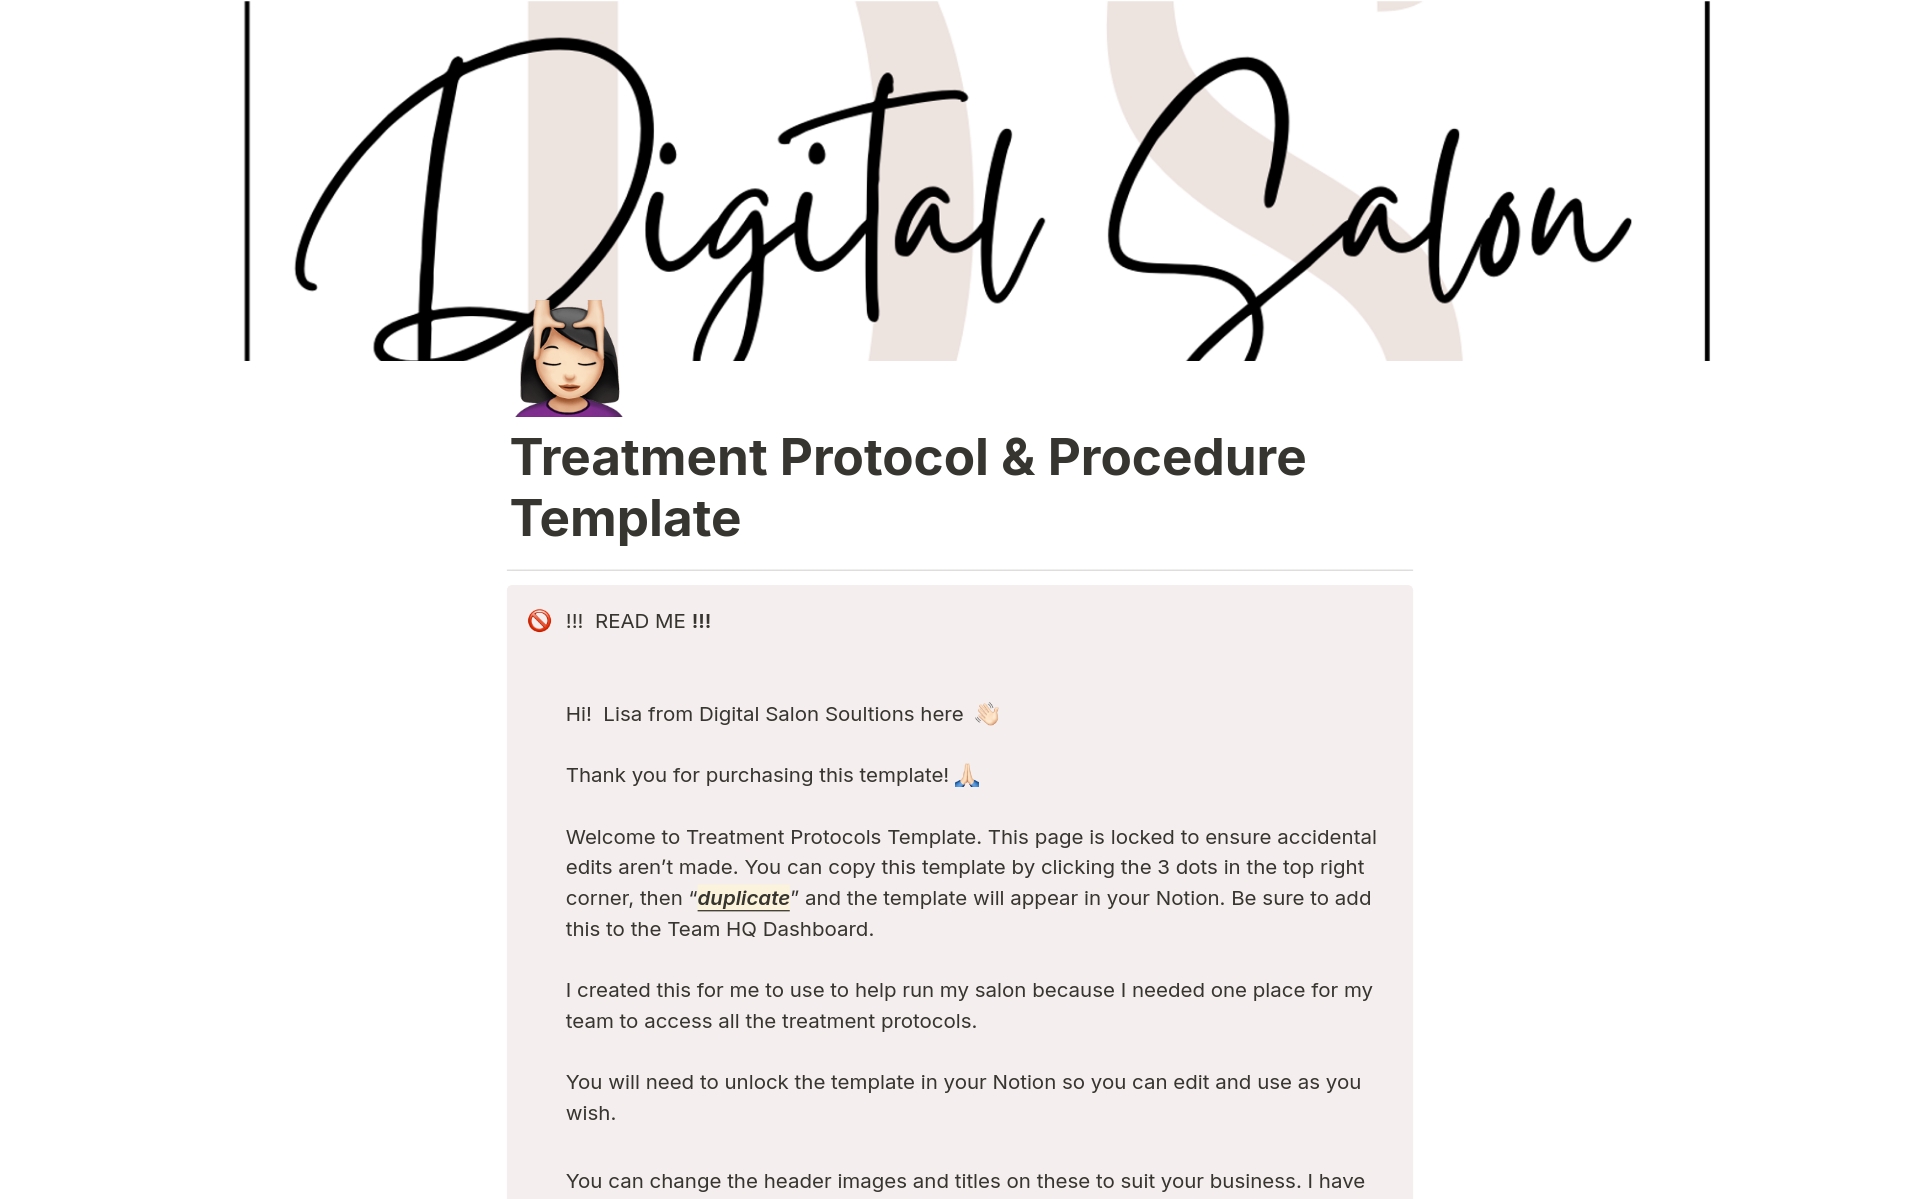 Vista previa de plantilla para Treatment Protocol & Procedure Template